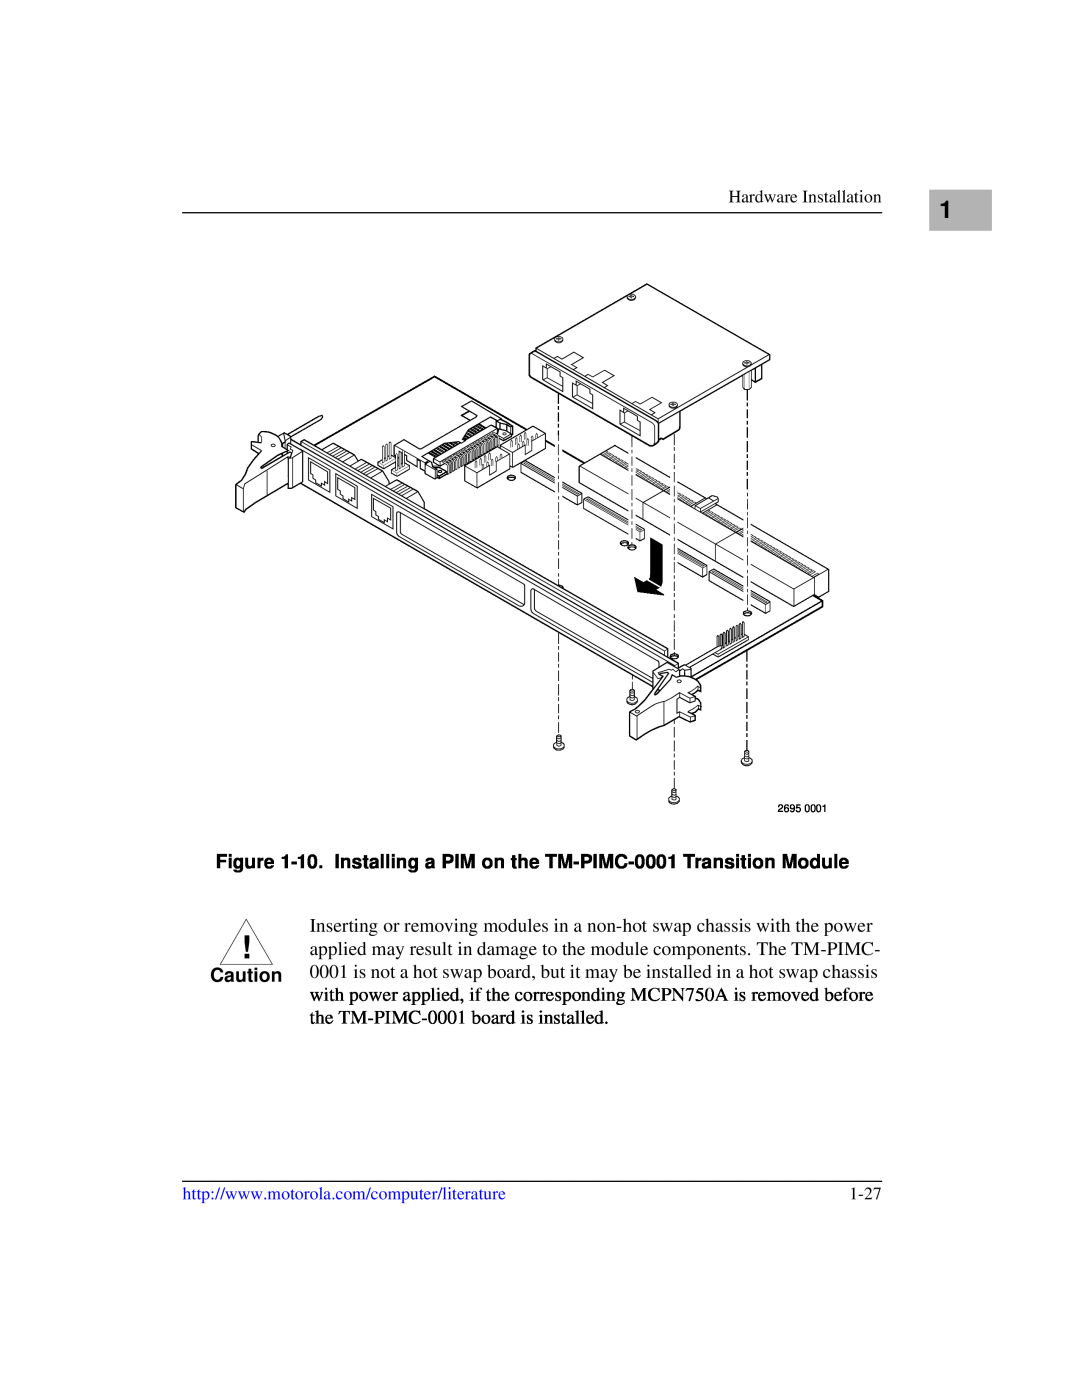 Motorola IH5, MCPN750A manual 10. Installing a PIM on the TM-PIMC-0001 Transition Module 